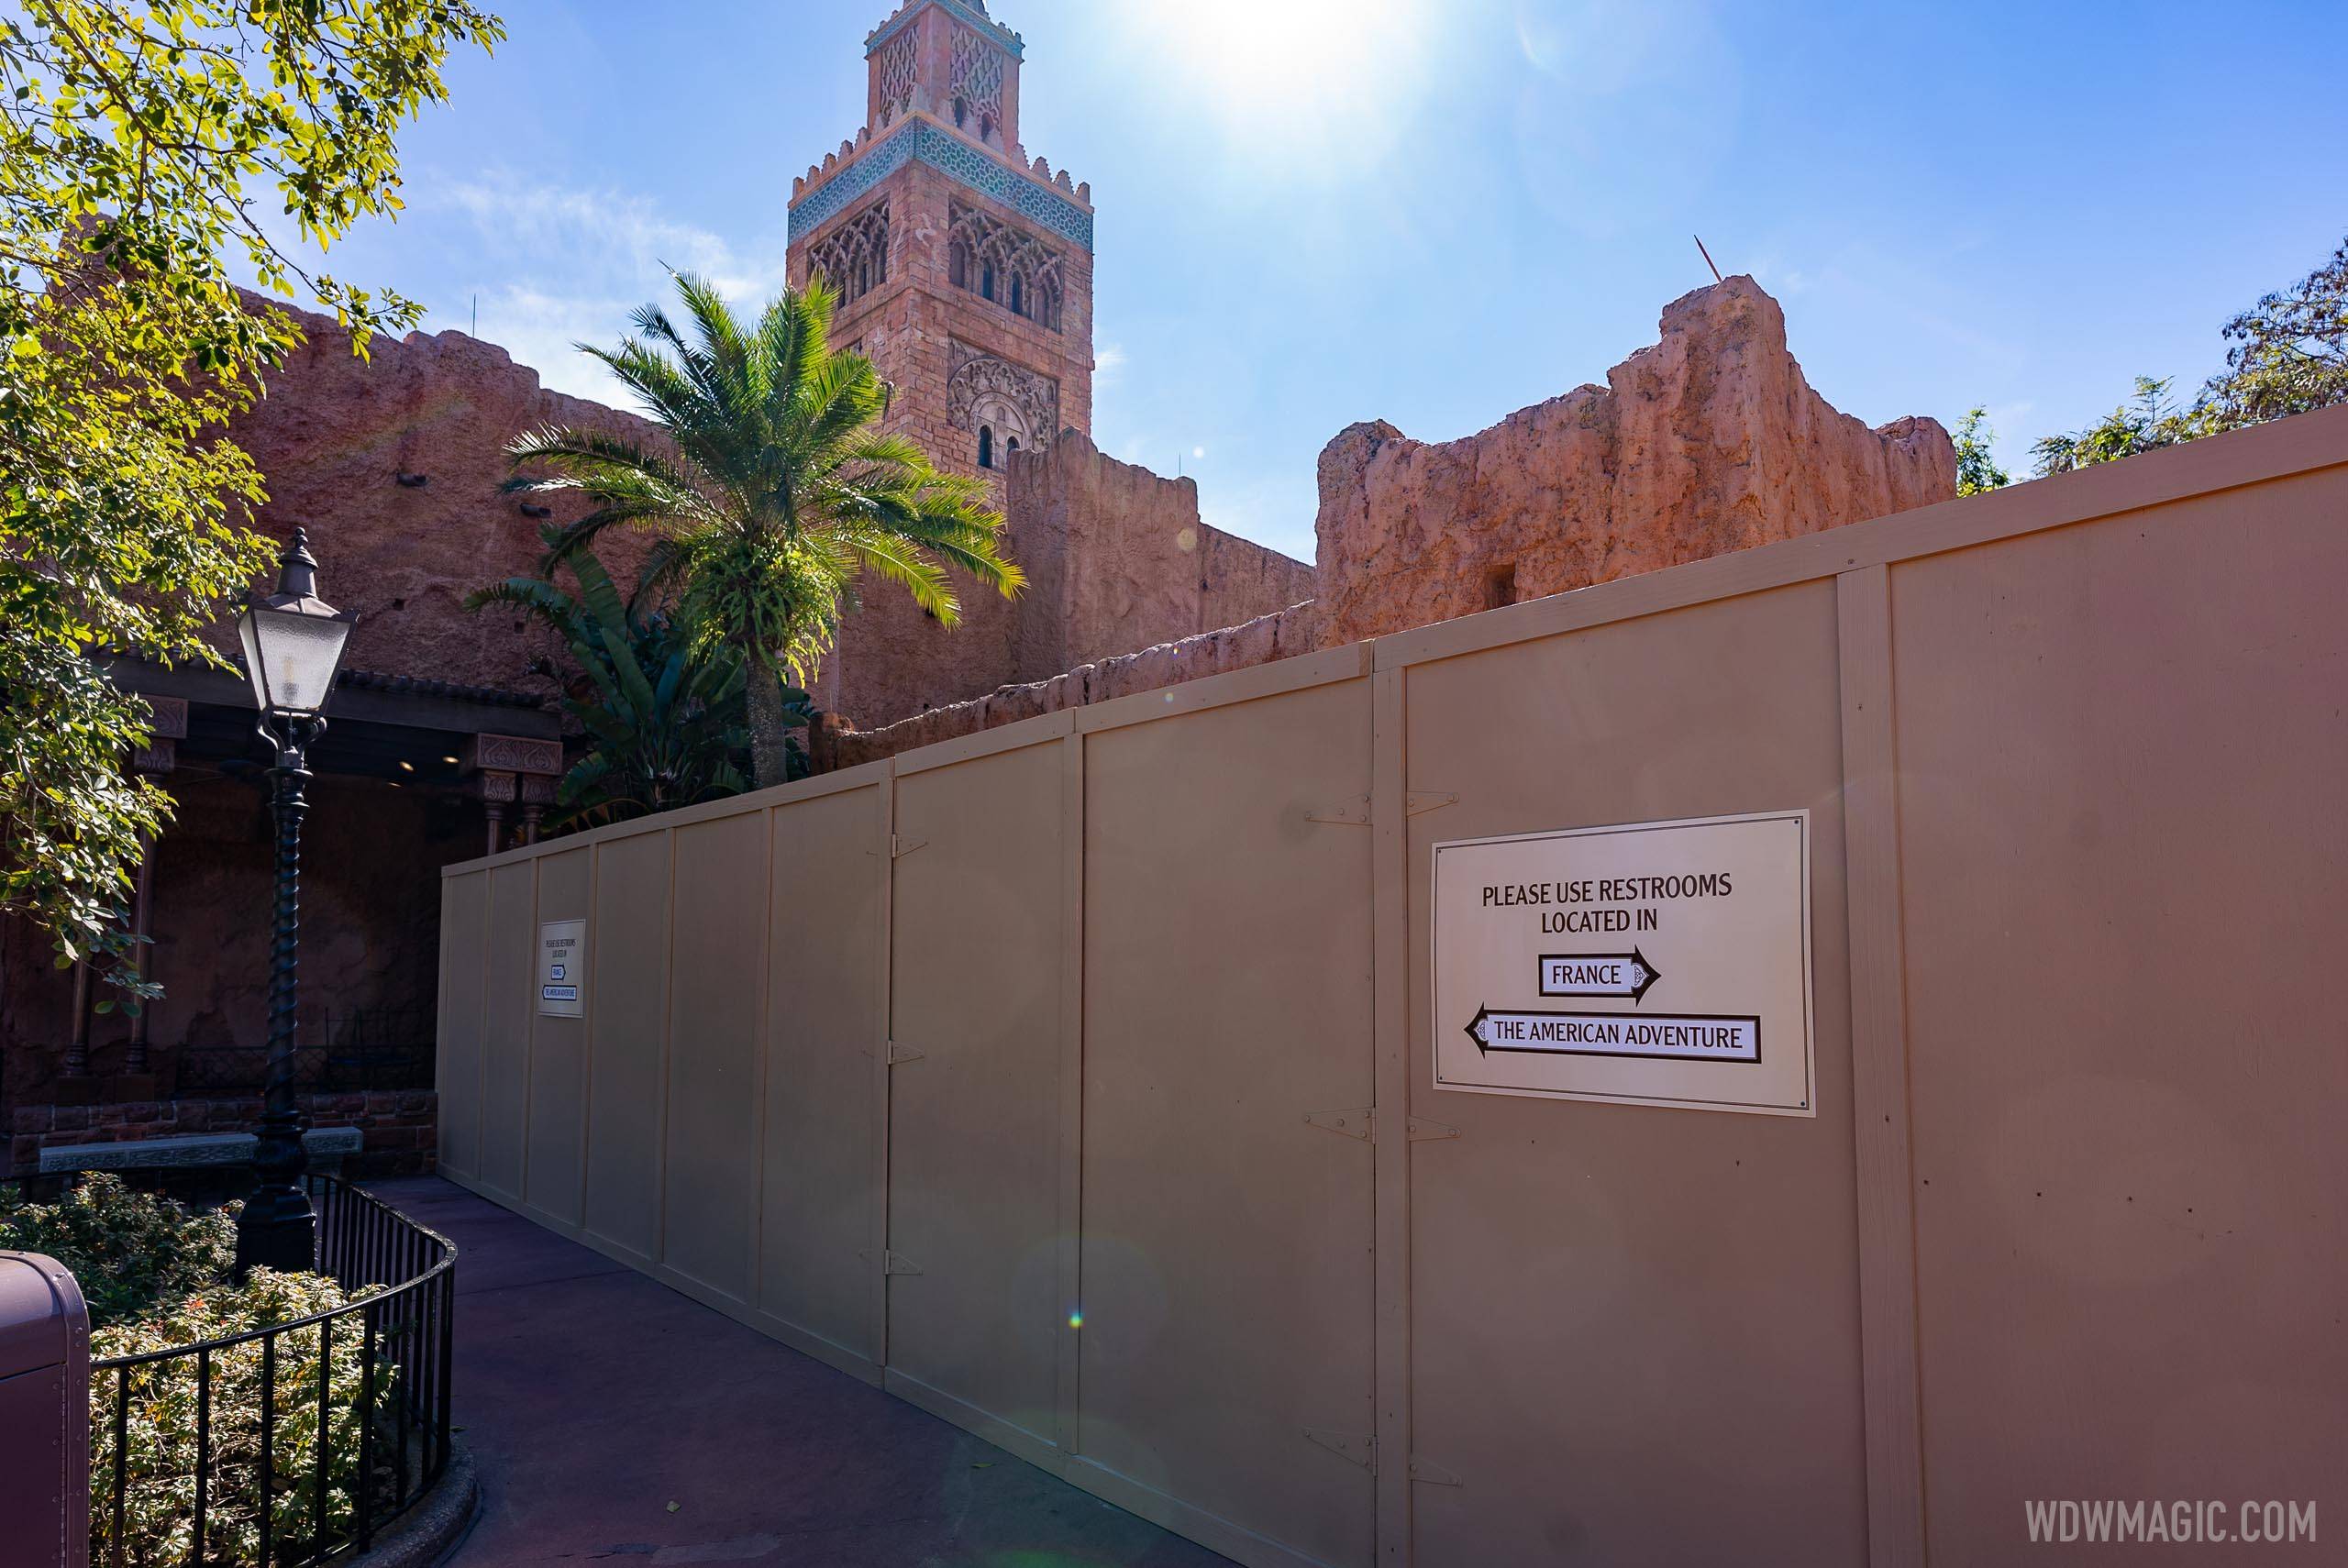 Morocco Pavilion restrooms refurbishment - January 18 2021